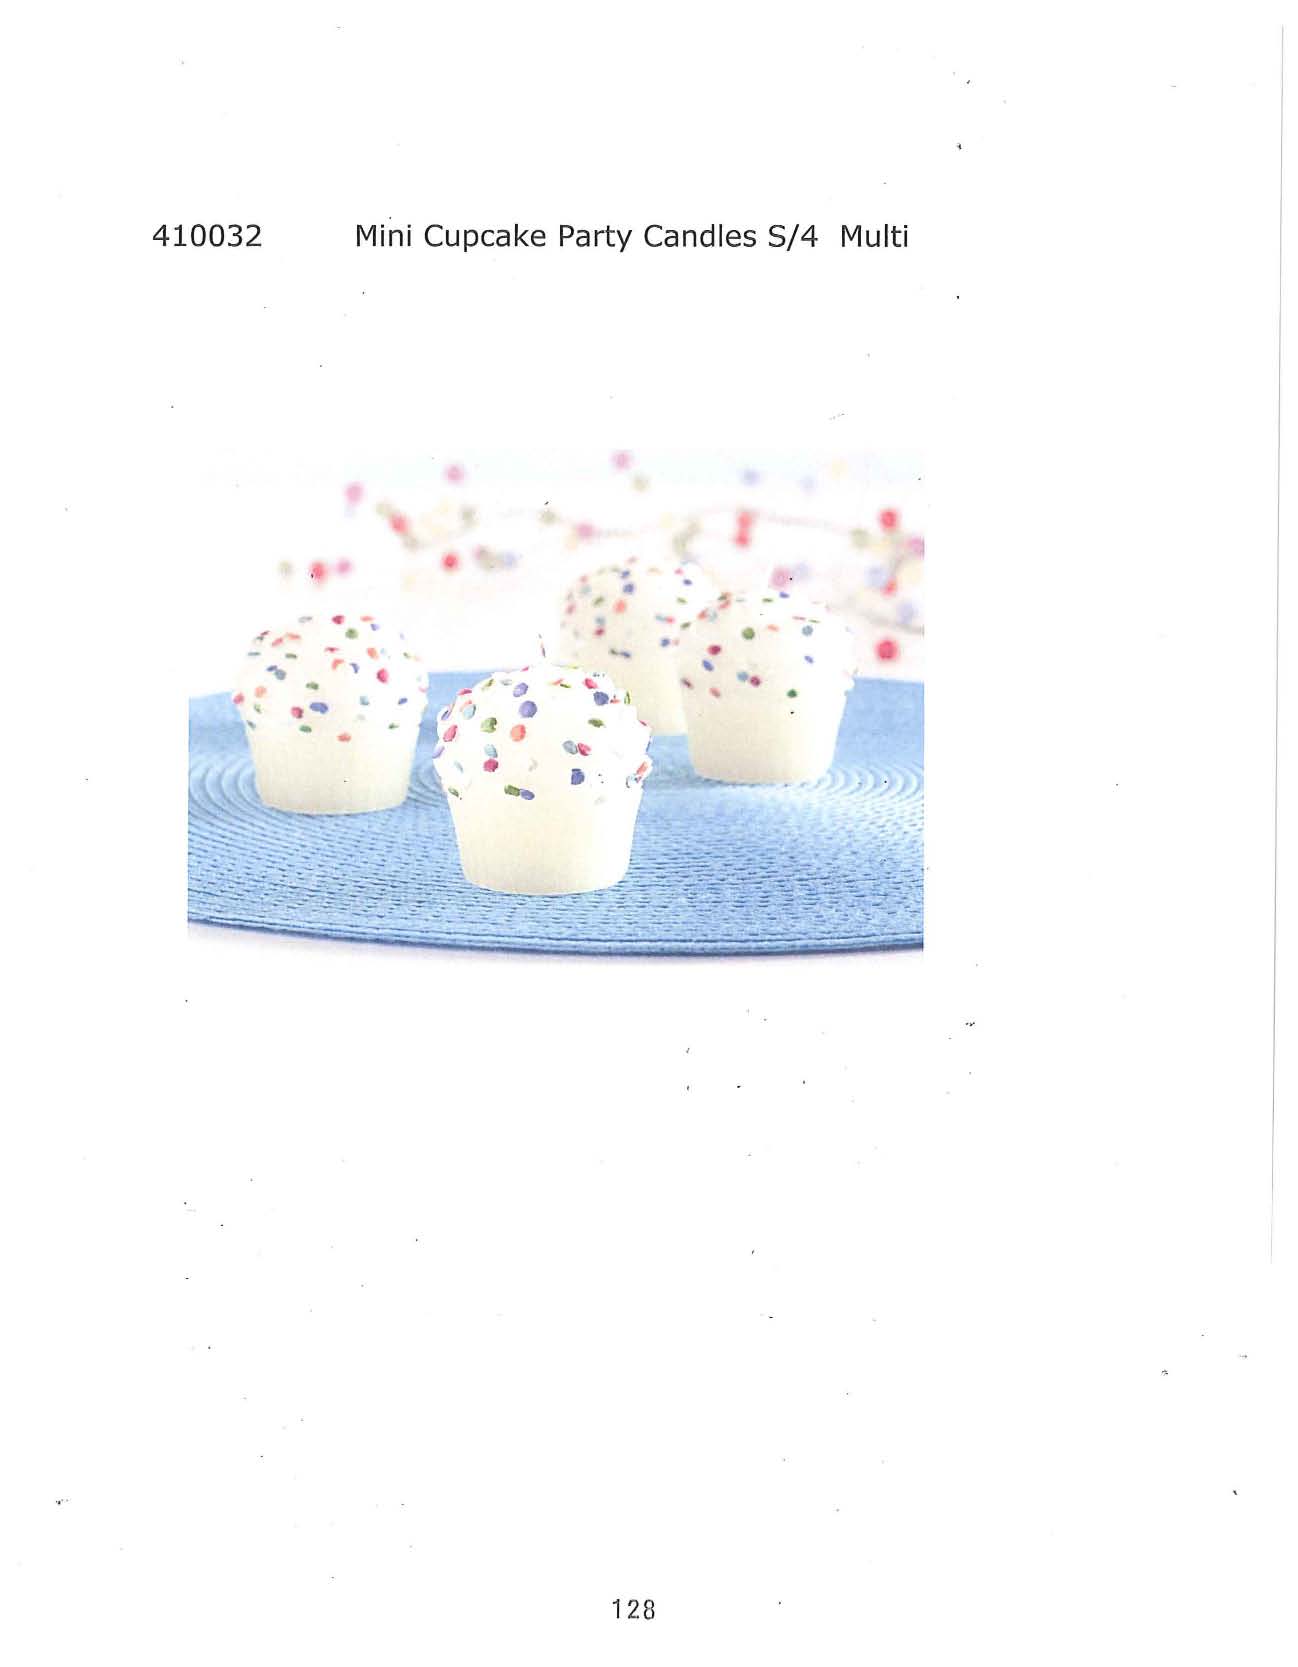 Mini Cupcake Party Candle s/4 - Multi